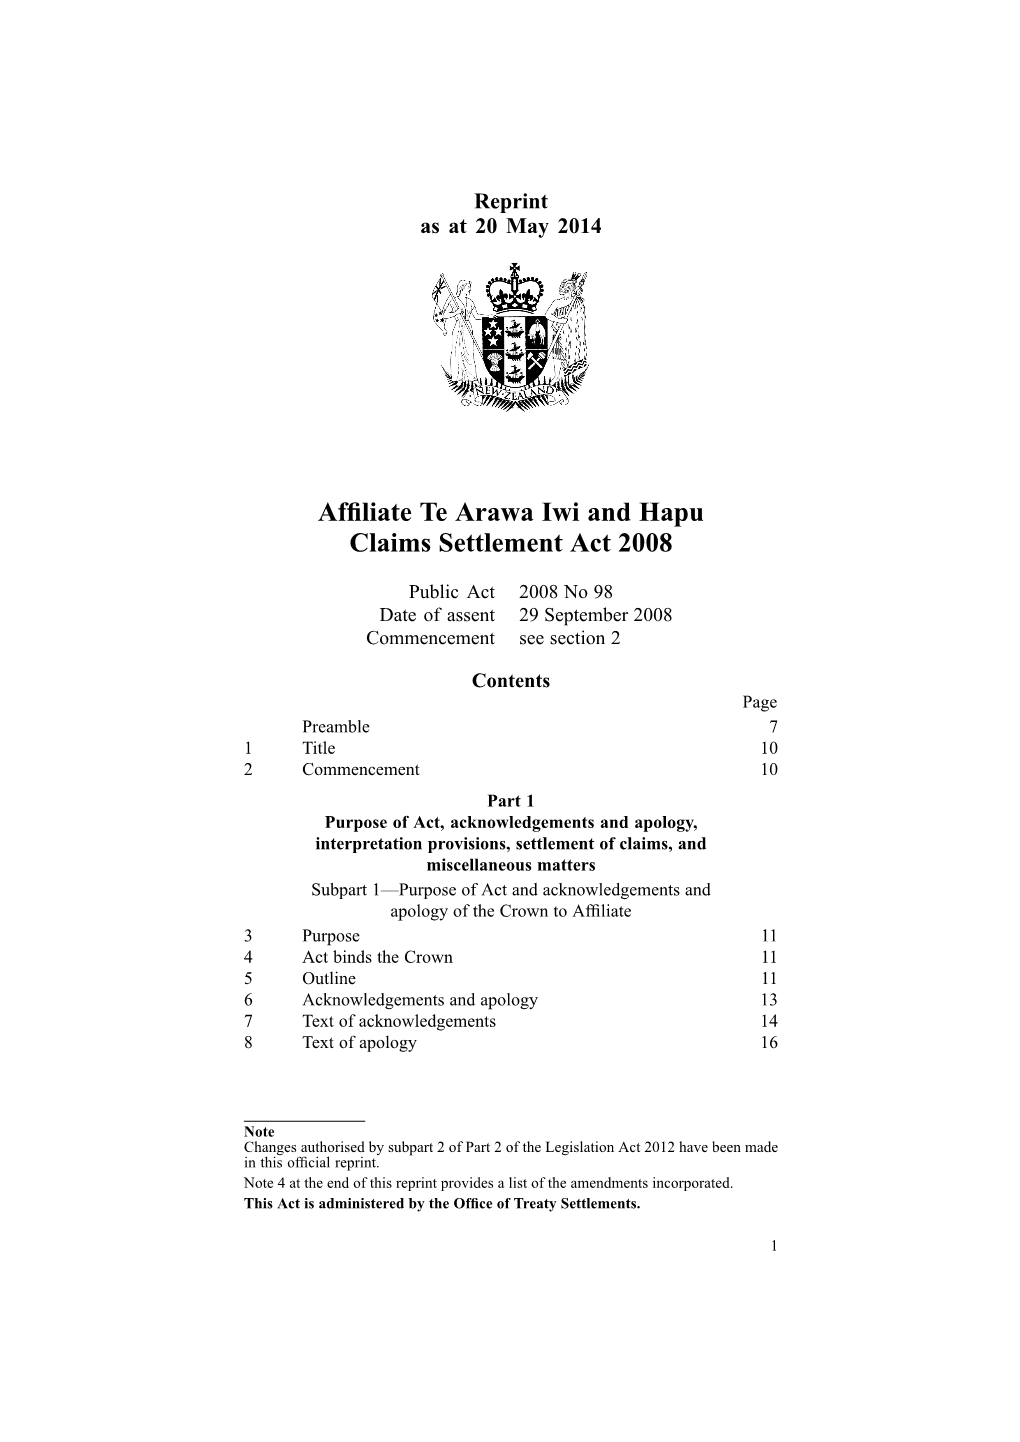 Affiliate Te Arawa Iwi and Hapu Claims Settlement Act 2008